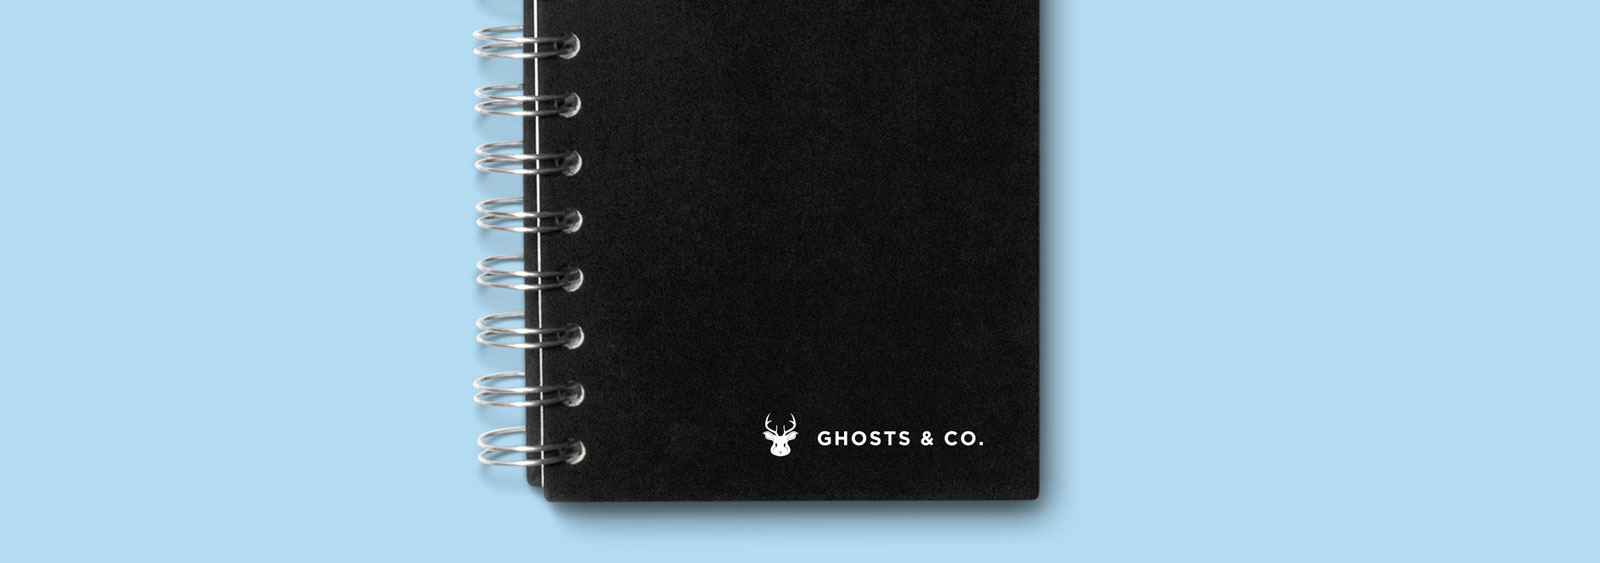 Ghosts & Co. Brand Design